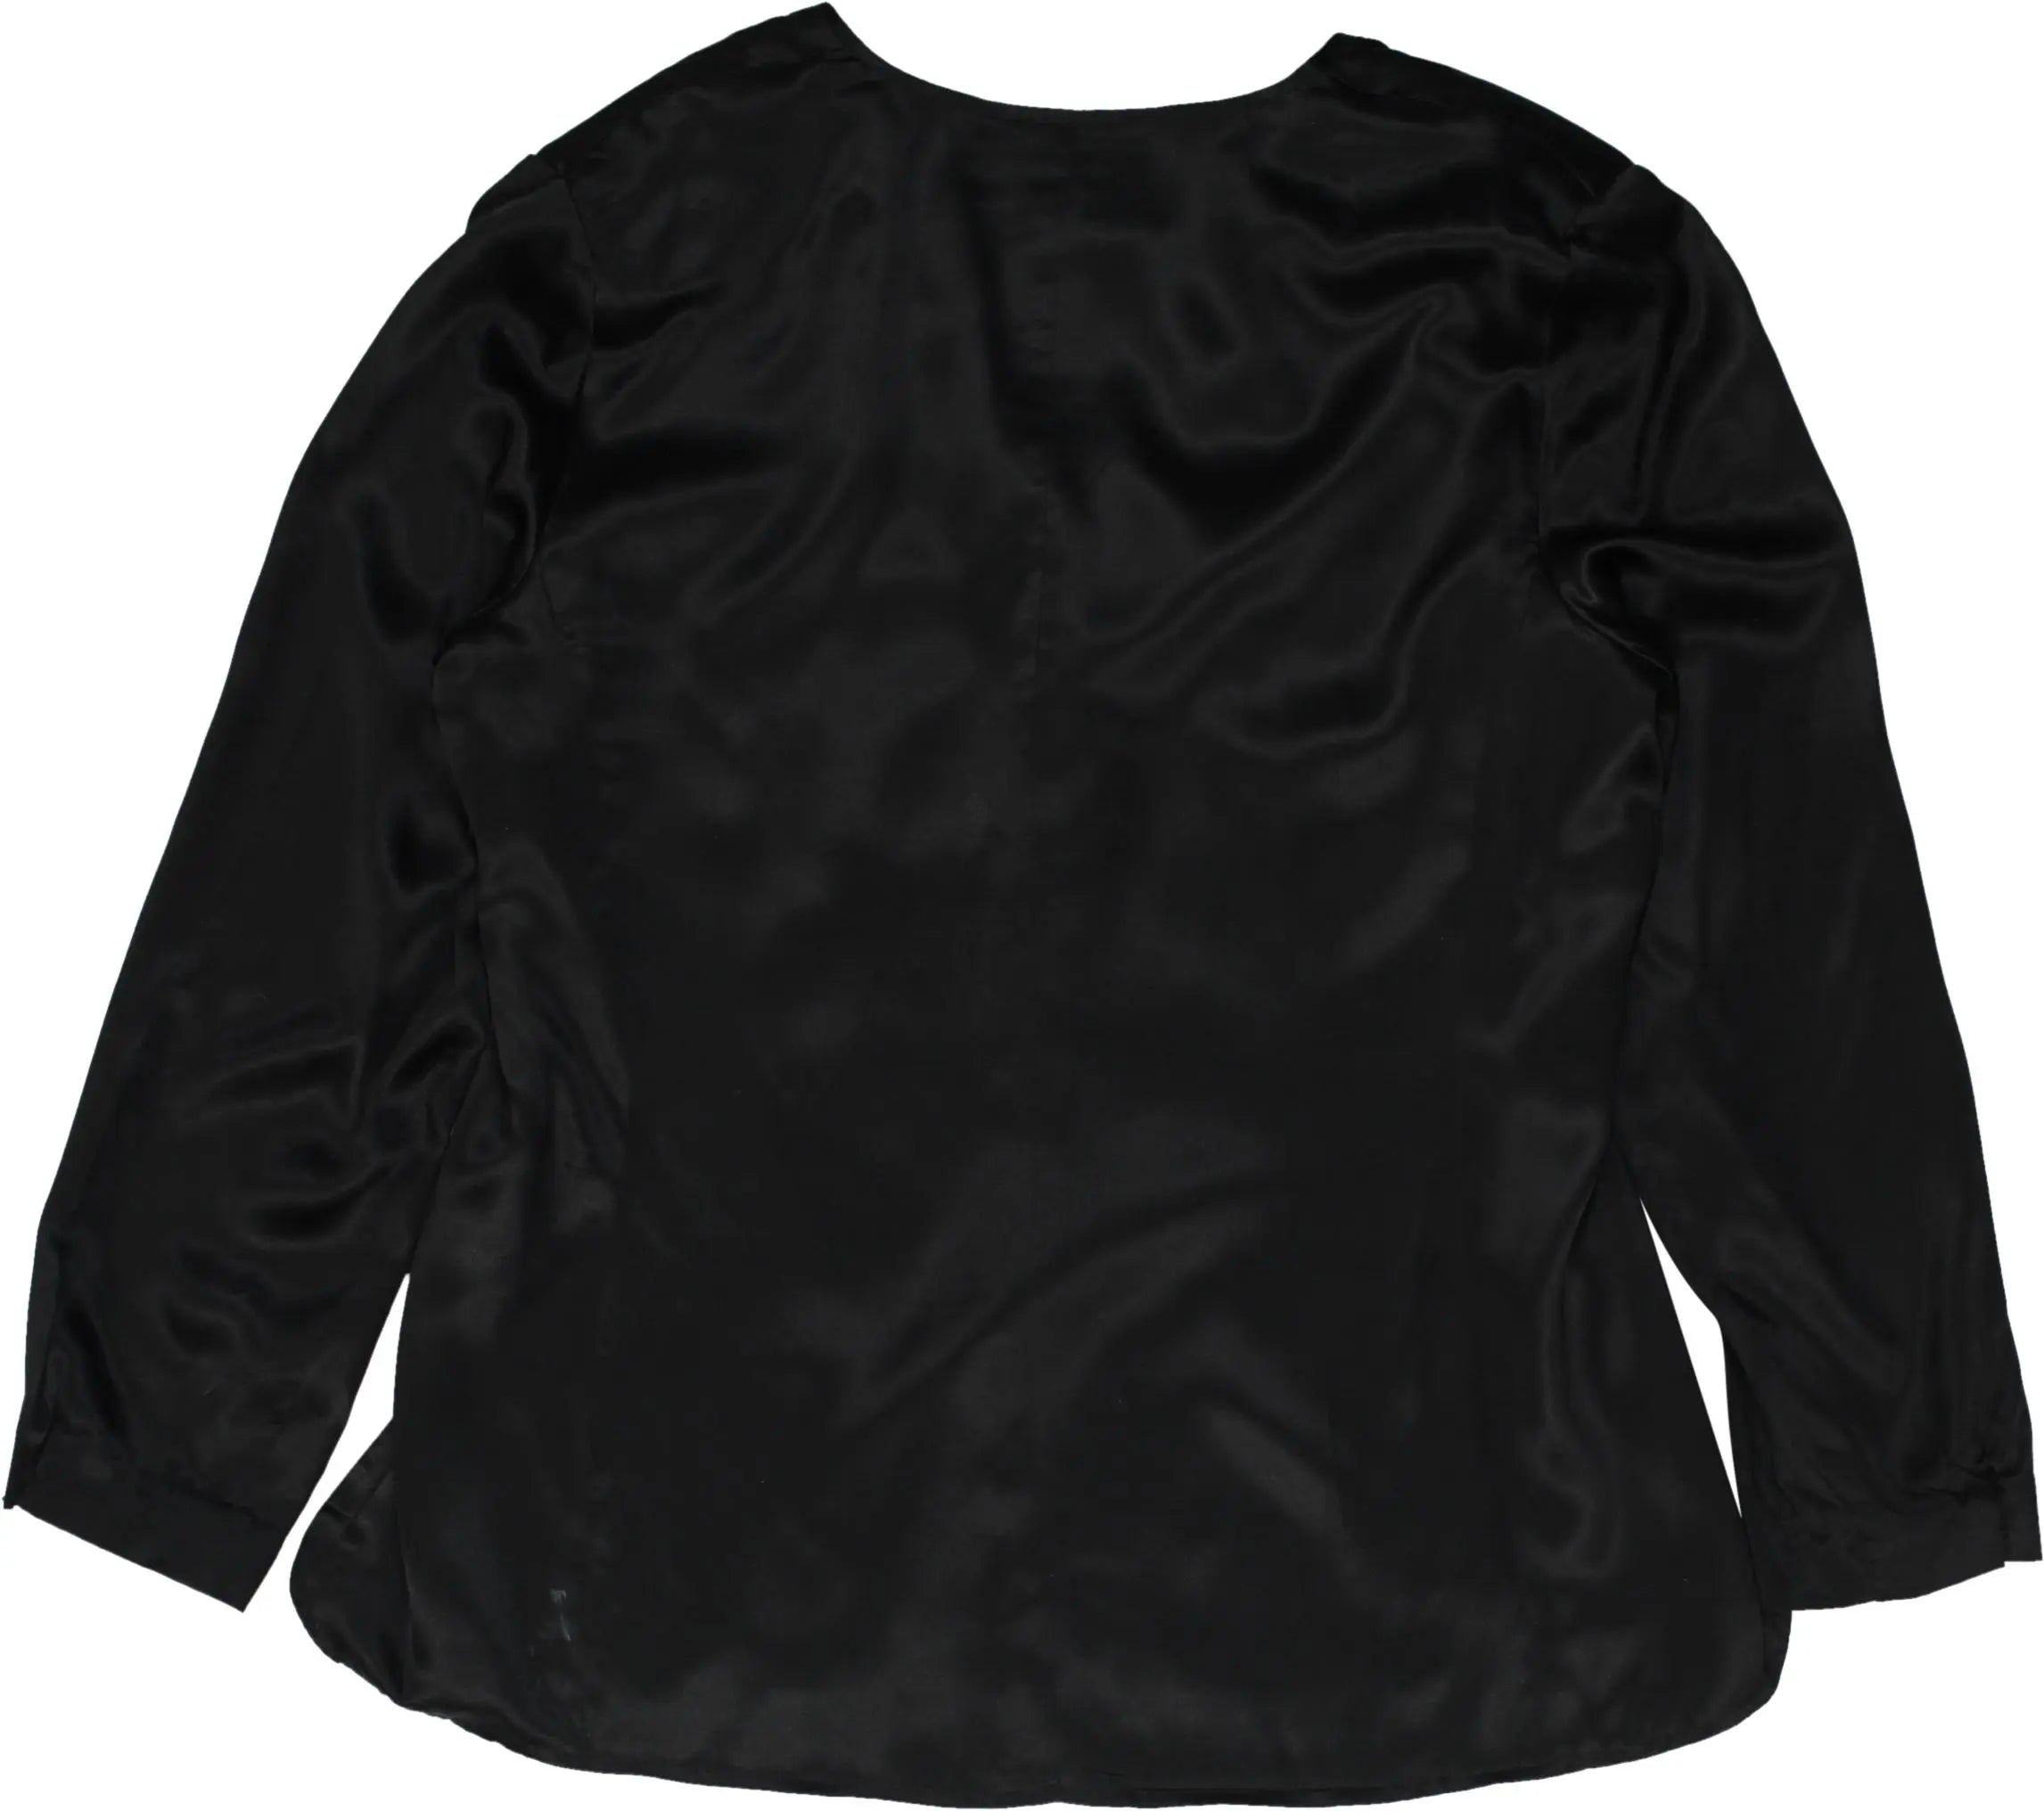 Spenser Jeremy - Silk blouse- ThriftTale.com - Vintage and second handclothing